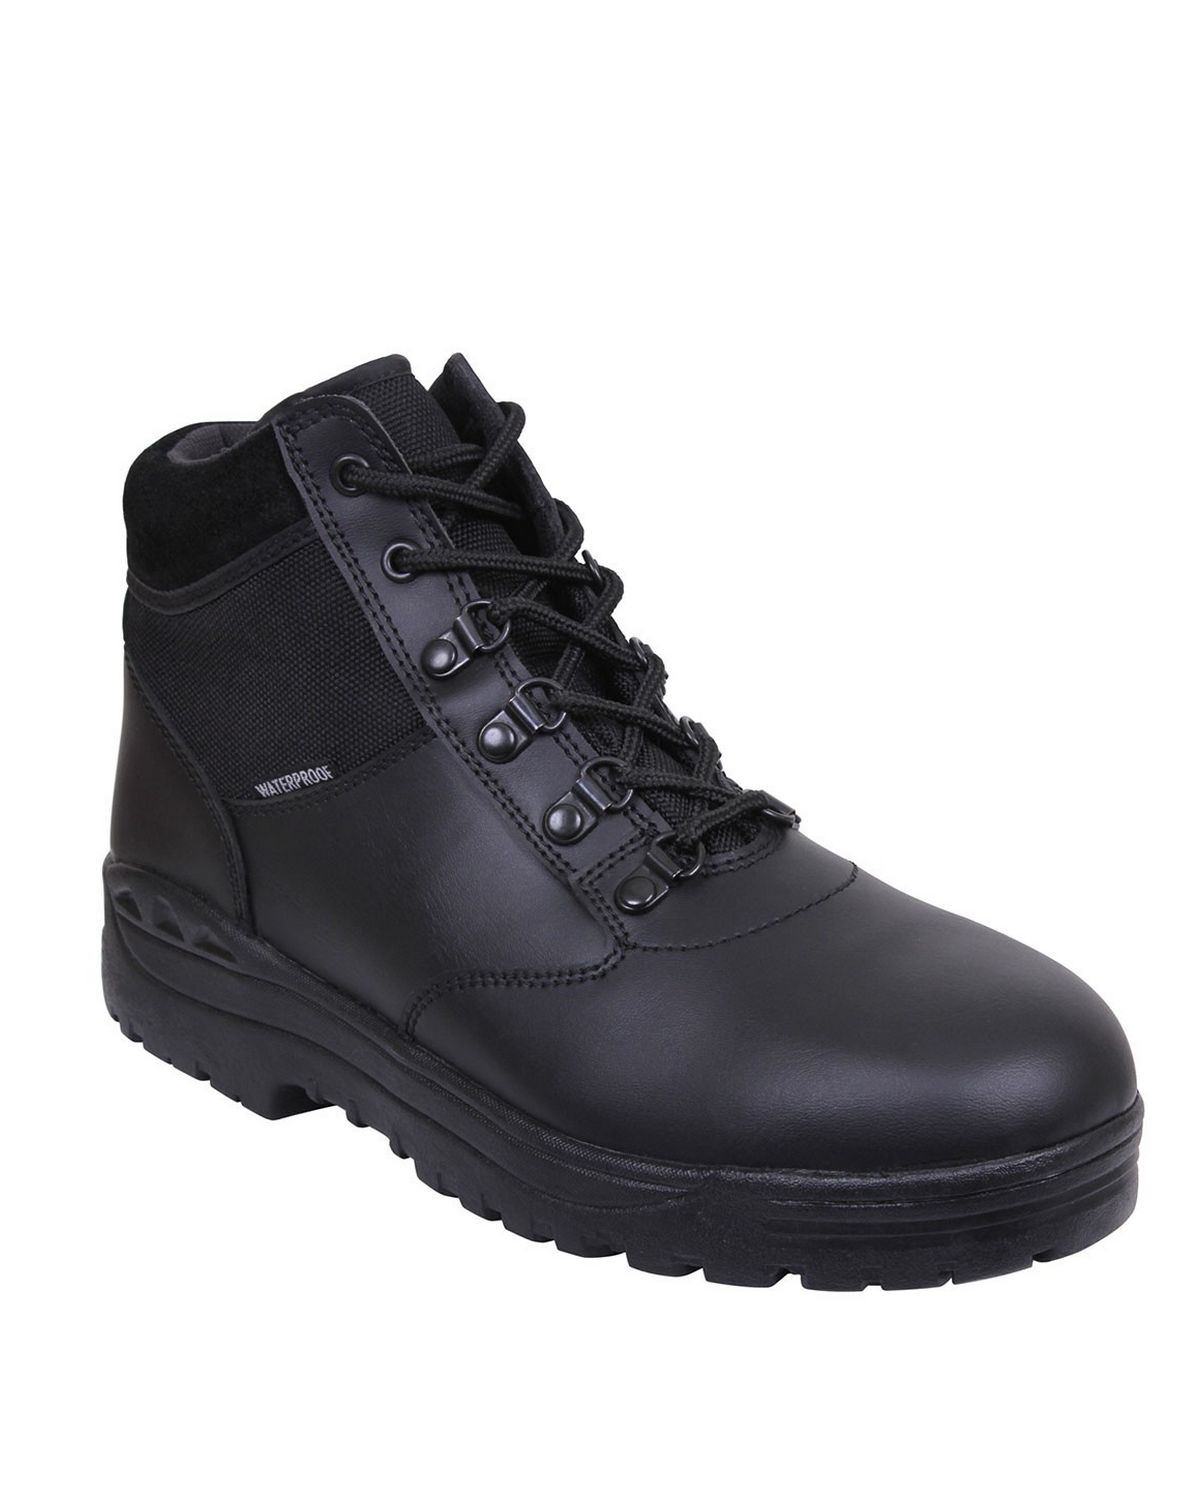 Young Lingen Men Womens Industrial Leather Shoes Waterproof Work Boots for Ladies and Gentlemen 